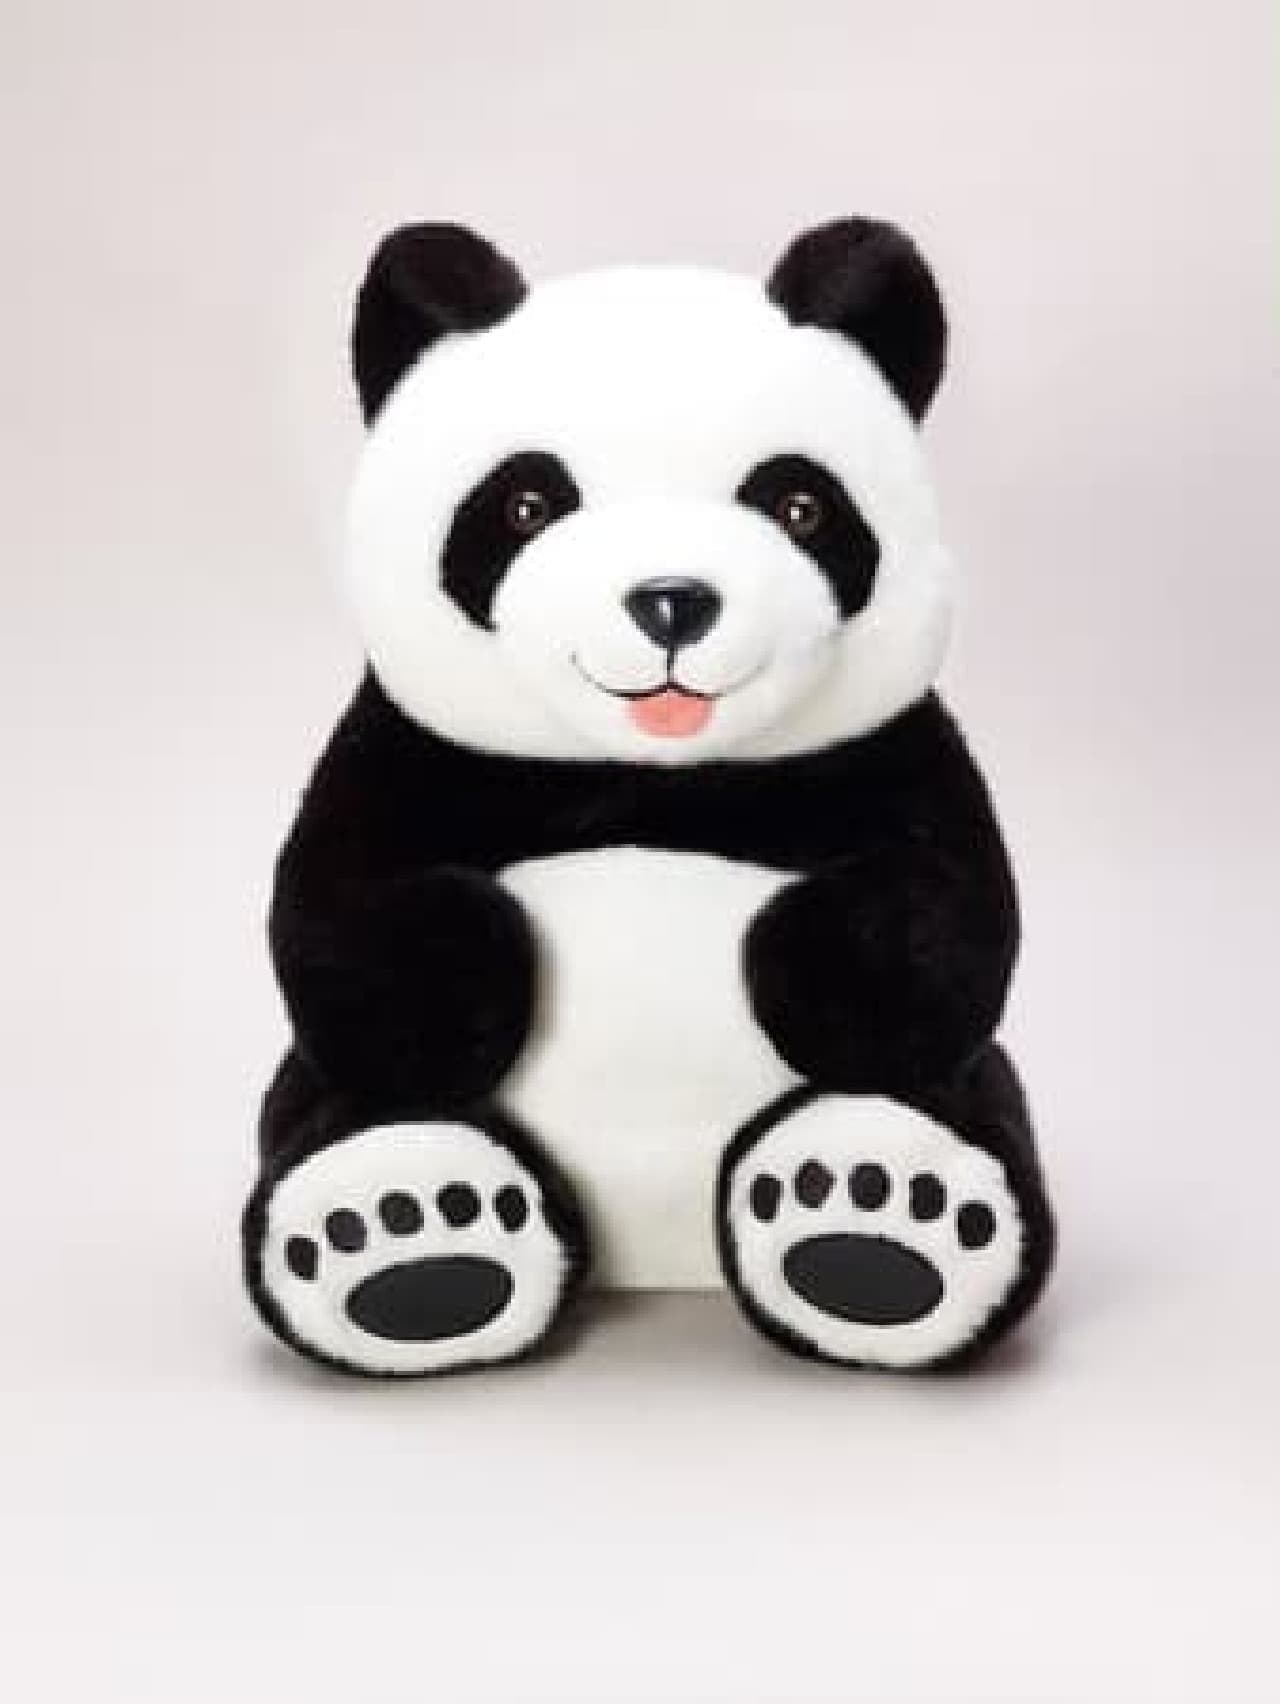 "Poka Panda" gift campaign